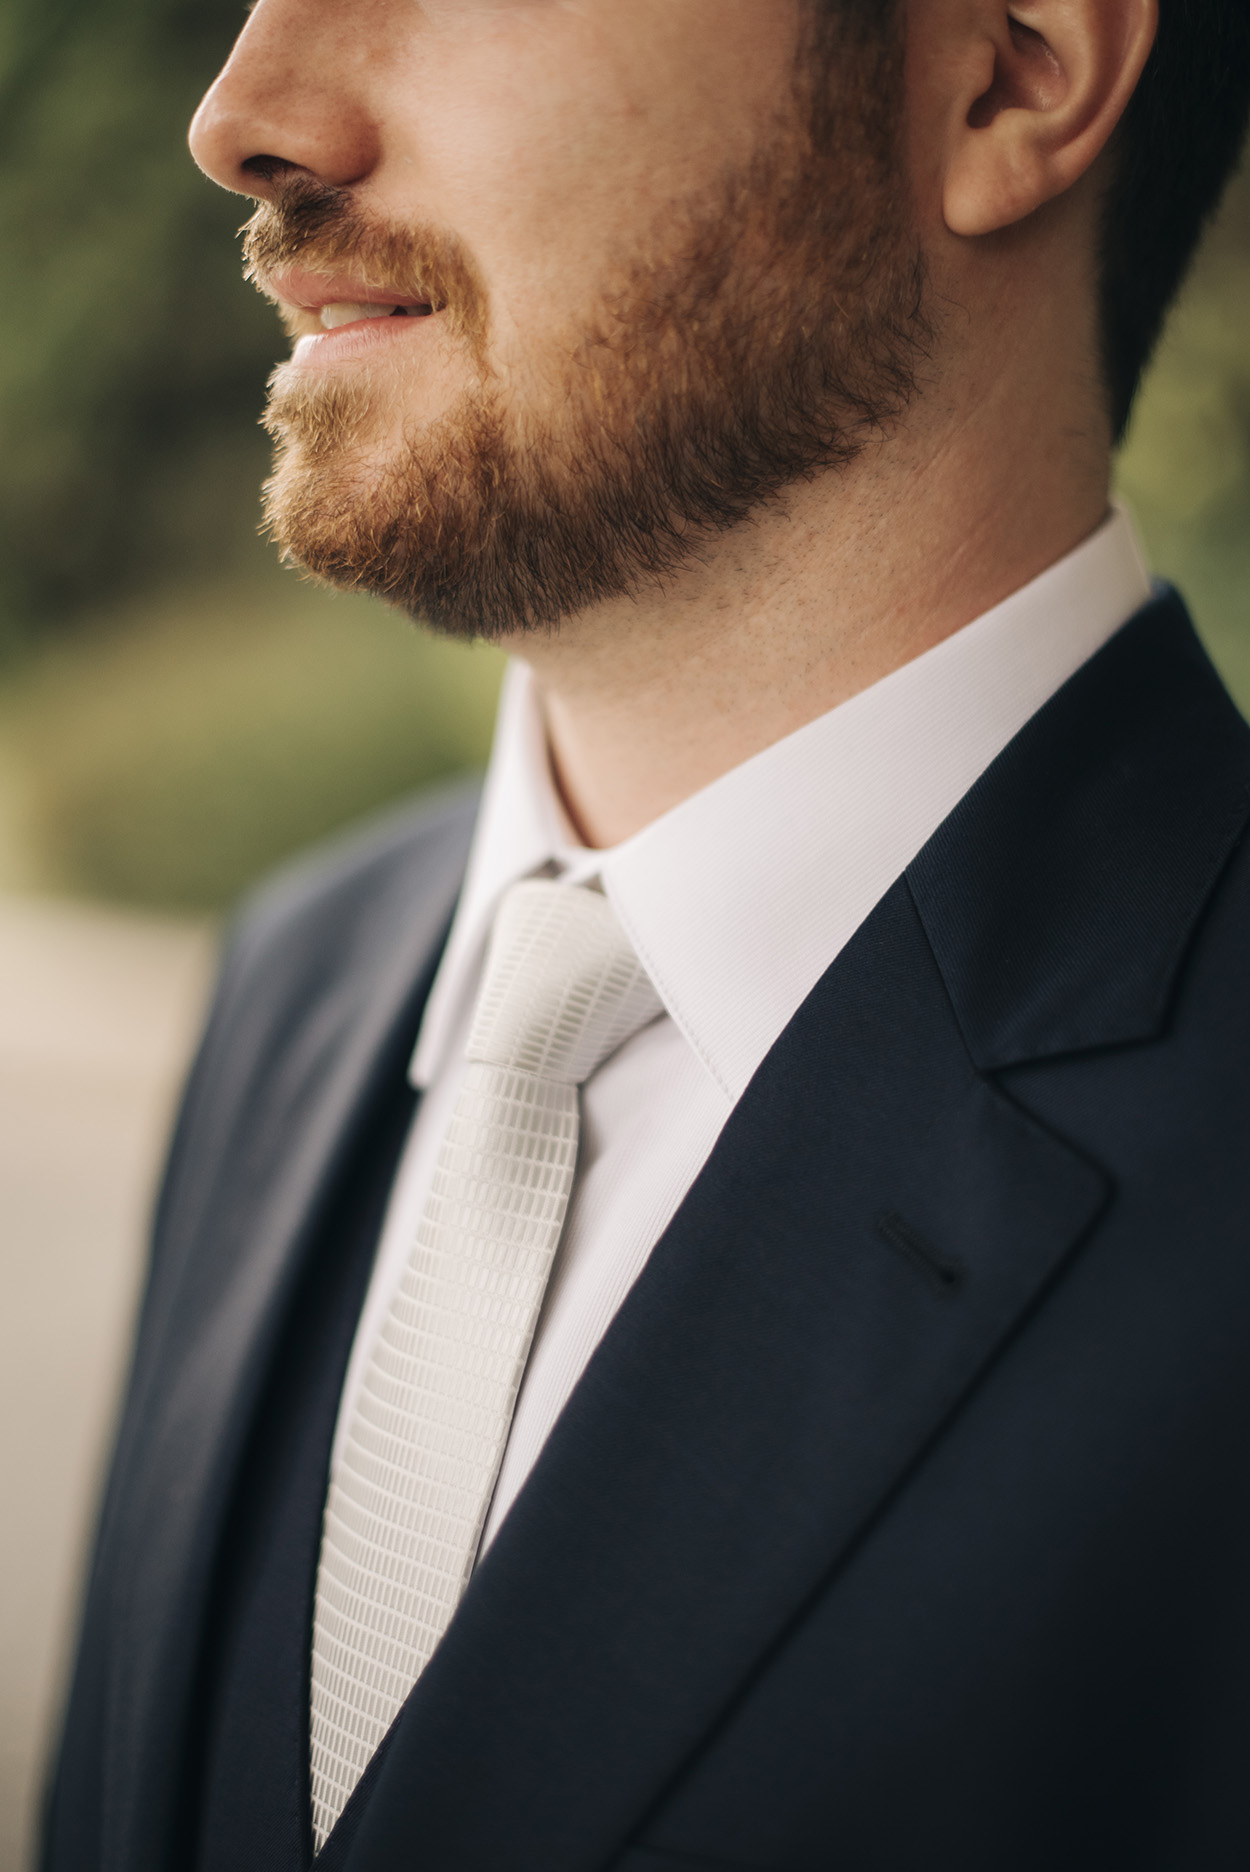 Terno preto e gravata branca cintilante